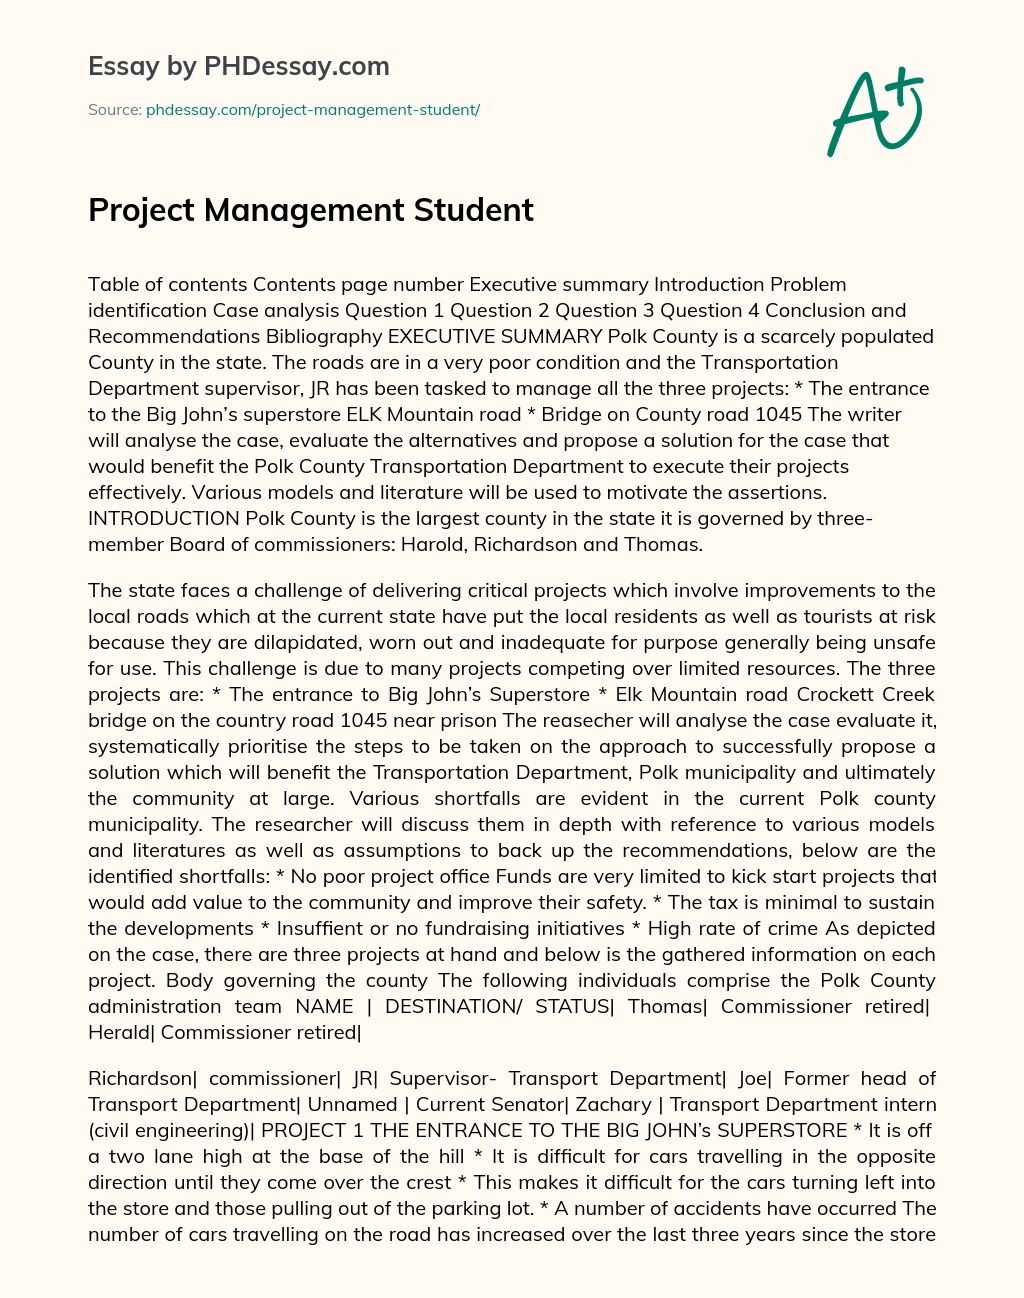 Project Management Student essay